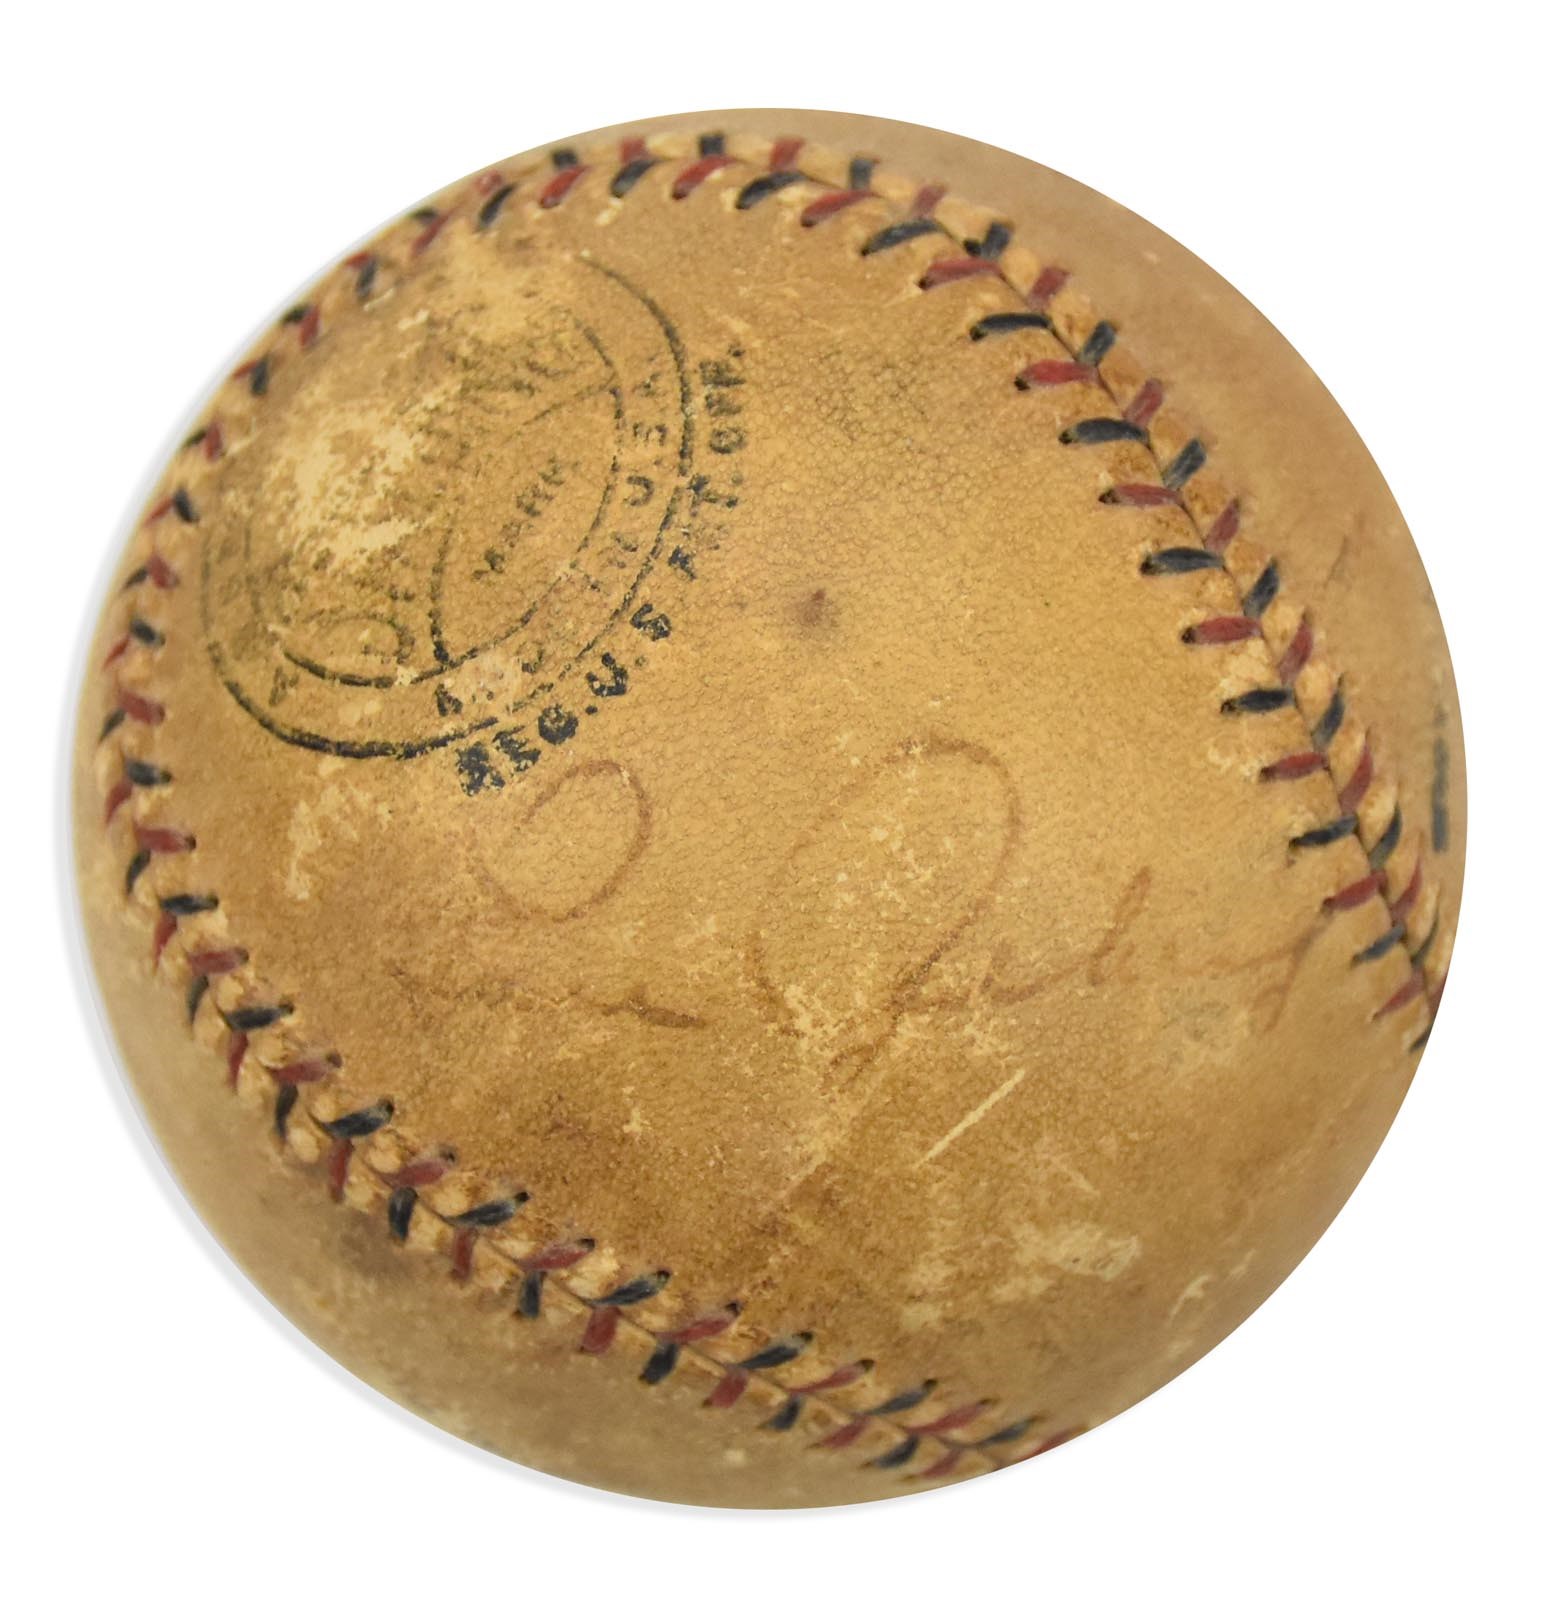 NY Yankees, Giants & Mets - Late 1920's Lou Gehrig Single Signed Baseball (JSA)